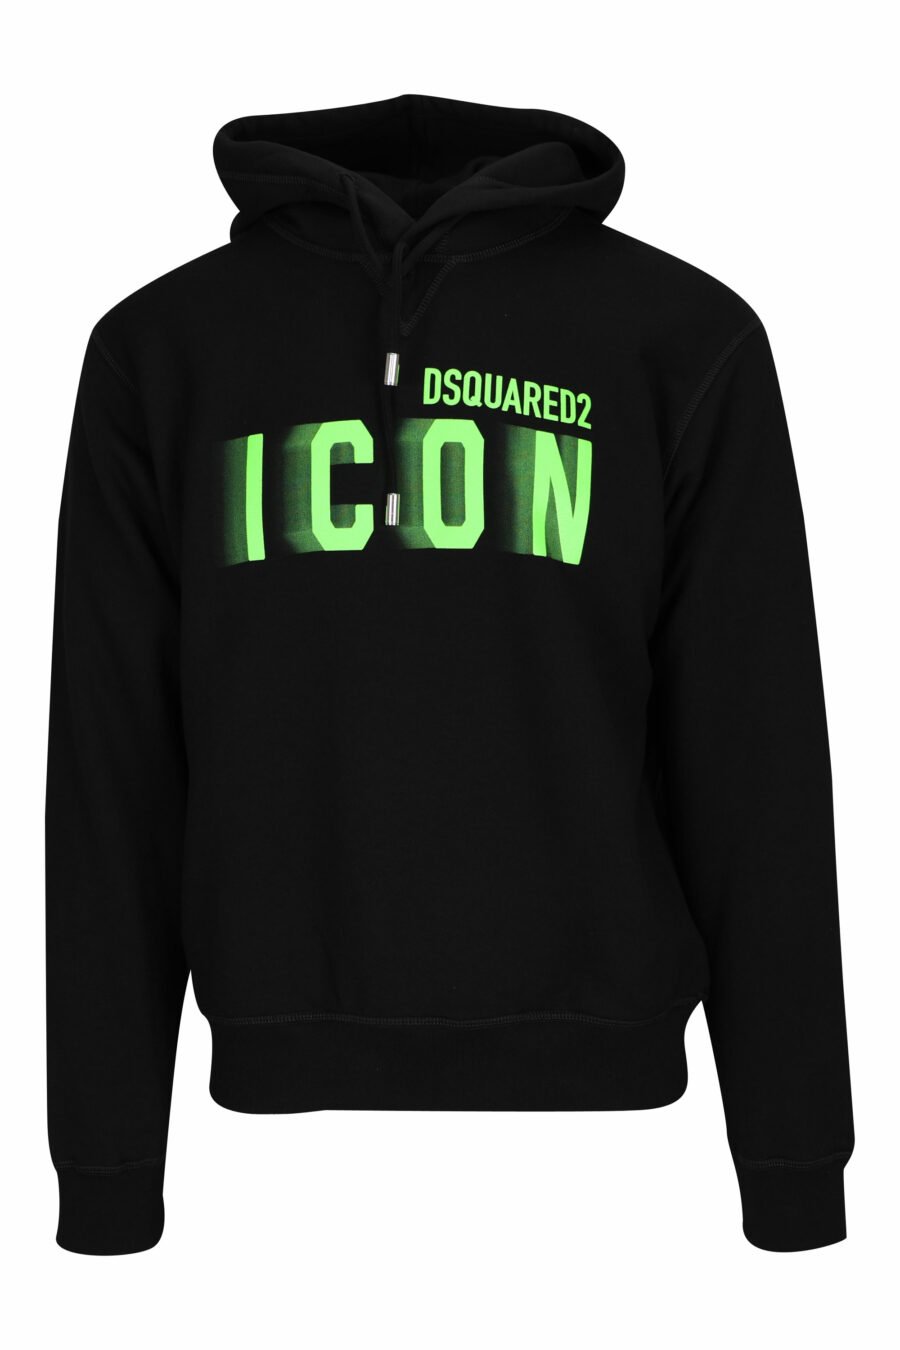 Black hooded sweatshirt with neon green blurred "icon" maxilogue - 8054148360436